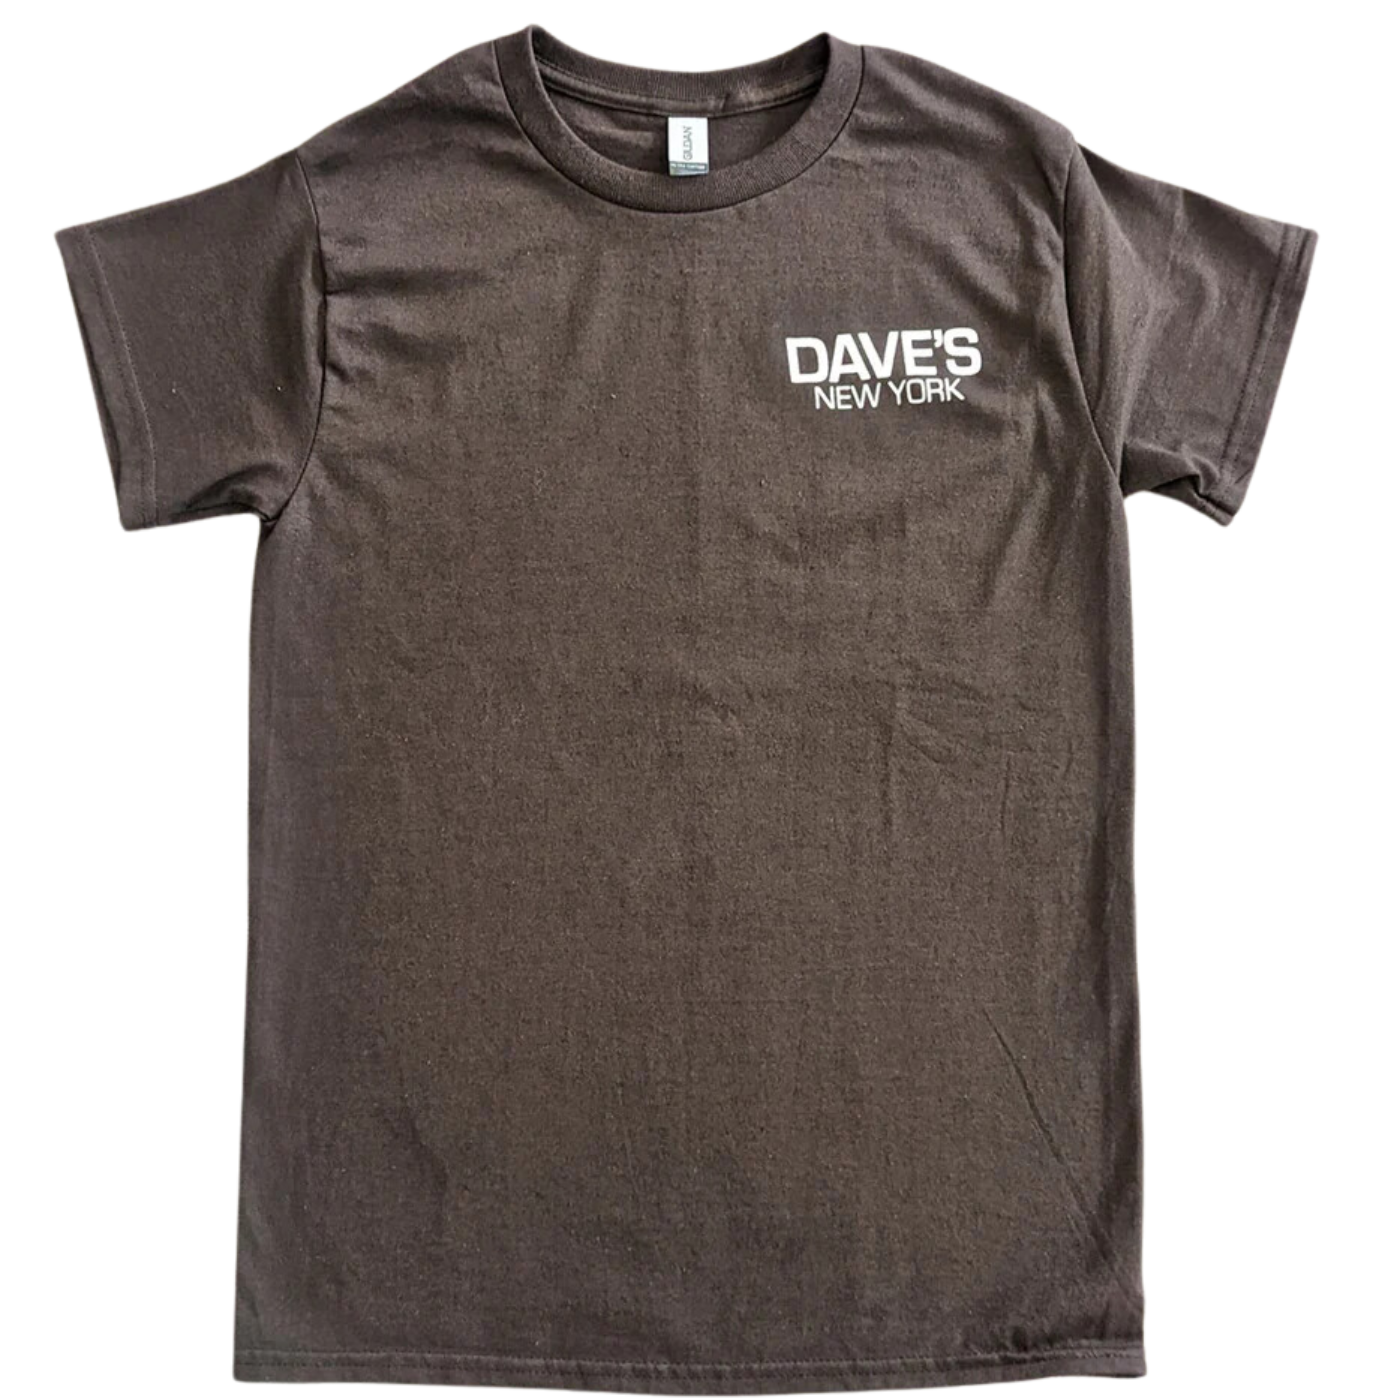 Camiseta Dave's New York Marrom